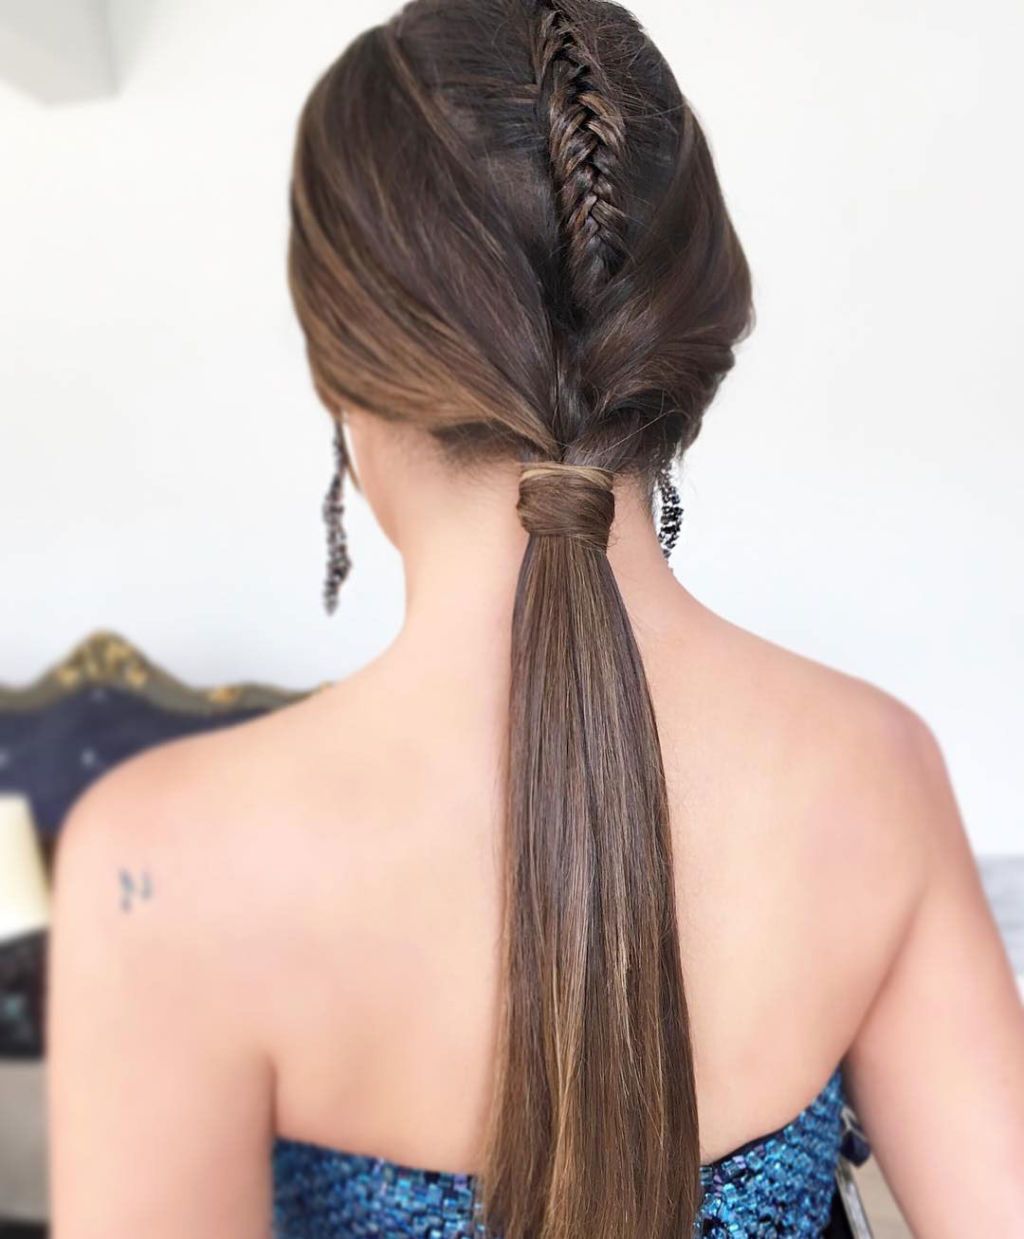 12 ways to wear ponytail braids, from tied-back twists to hybrid fishtails